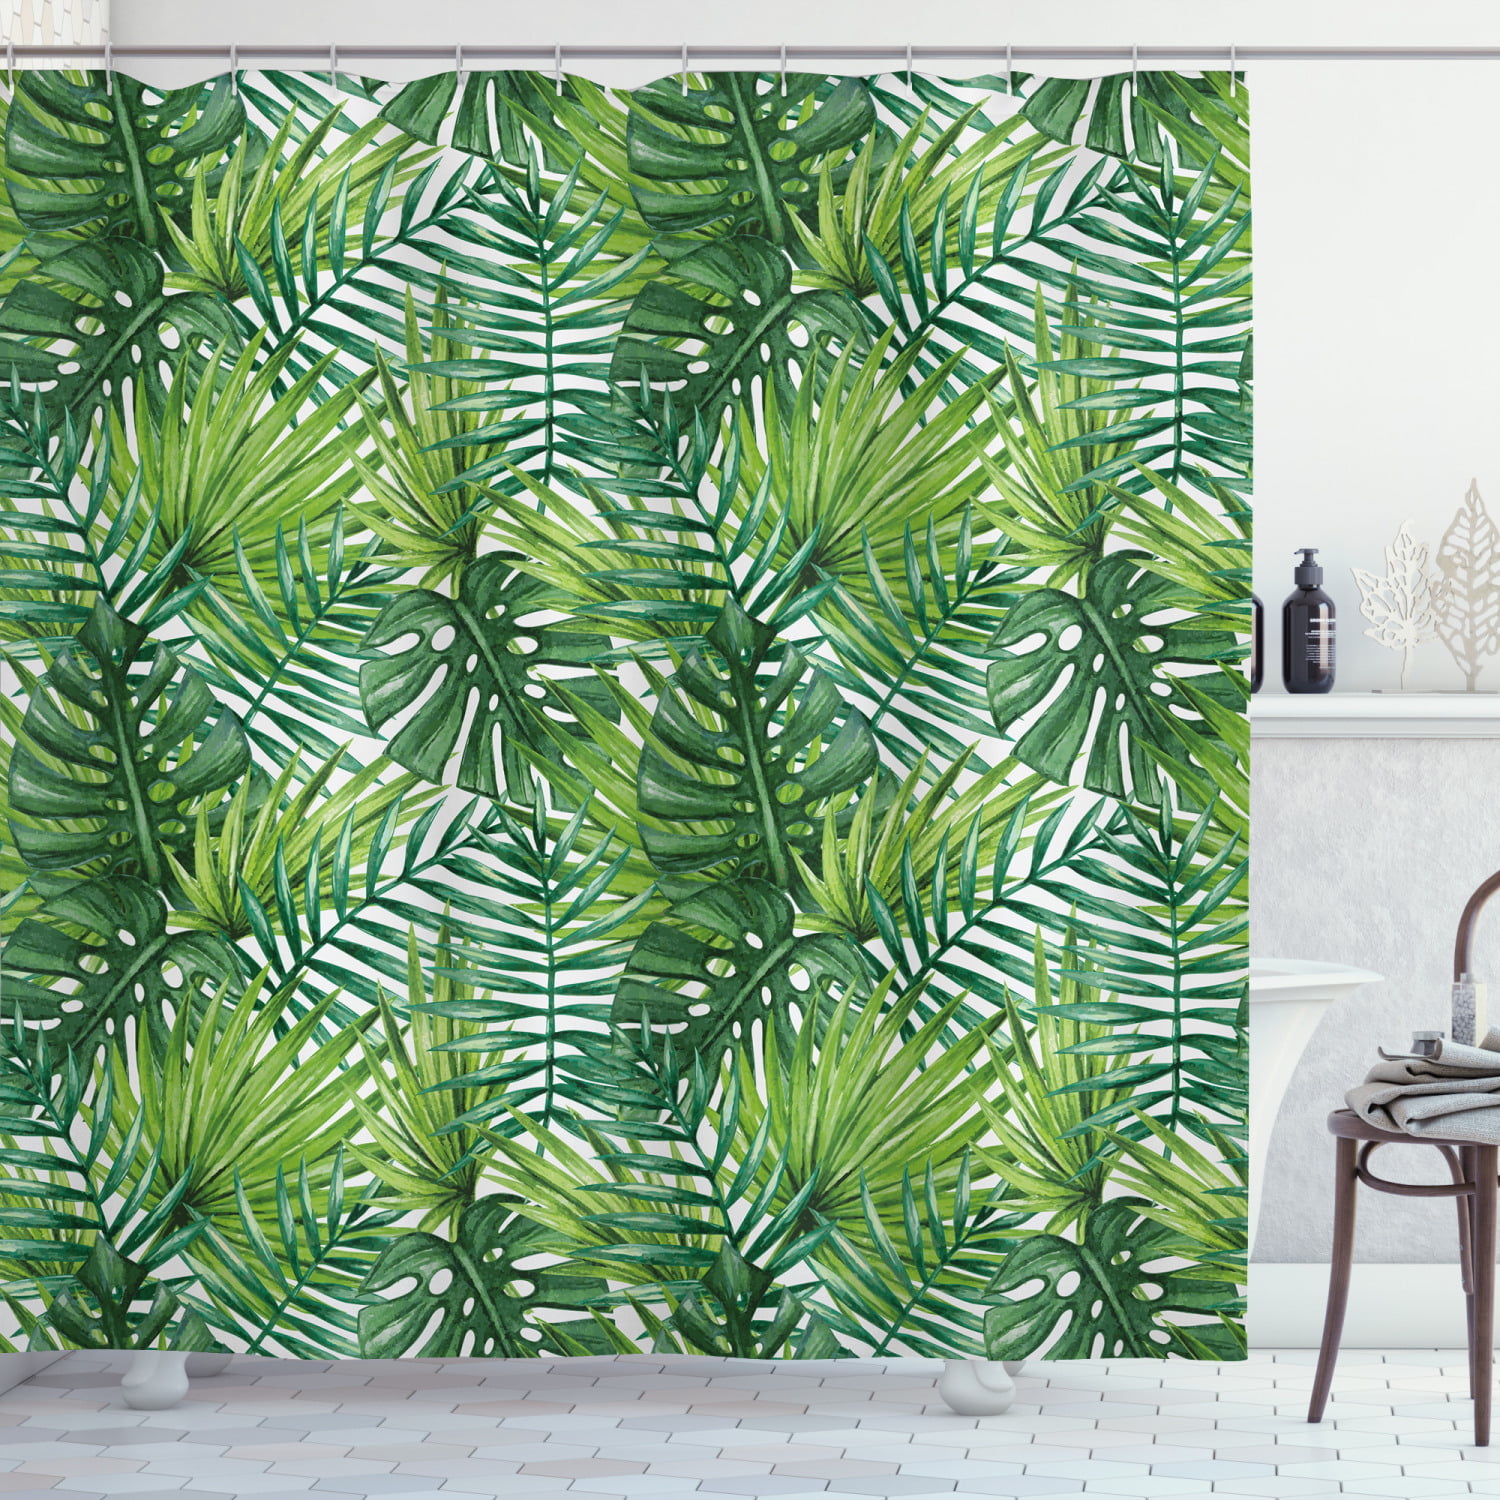 Exotic Tropical Palm Trees Banana Leaves Flamingo Shower Curtain Set Bath Decor 